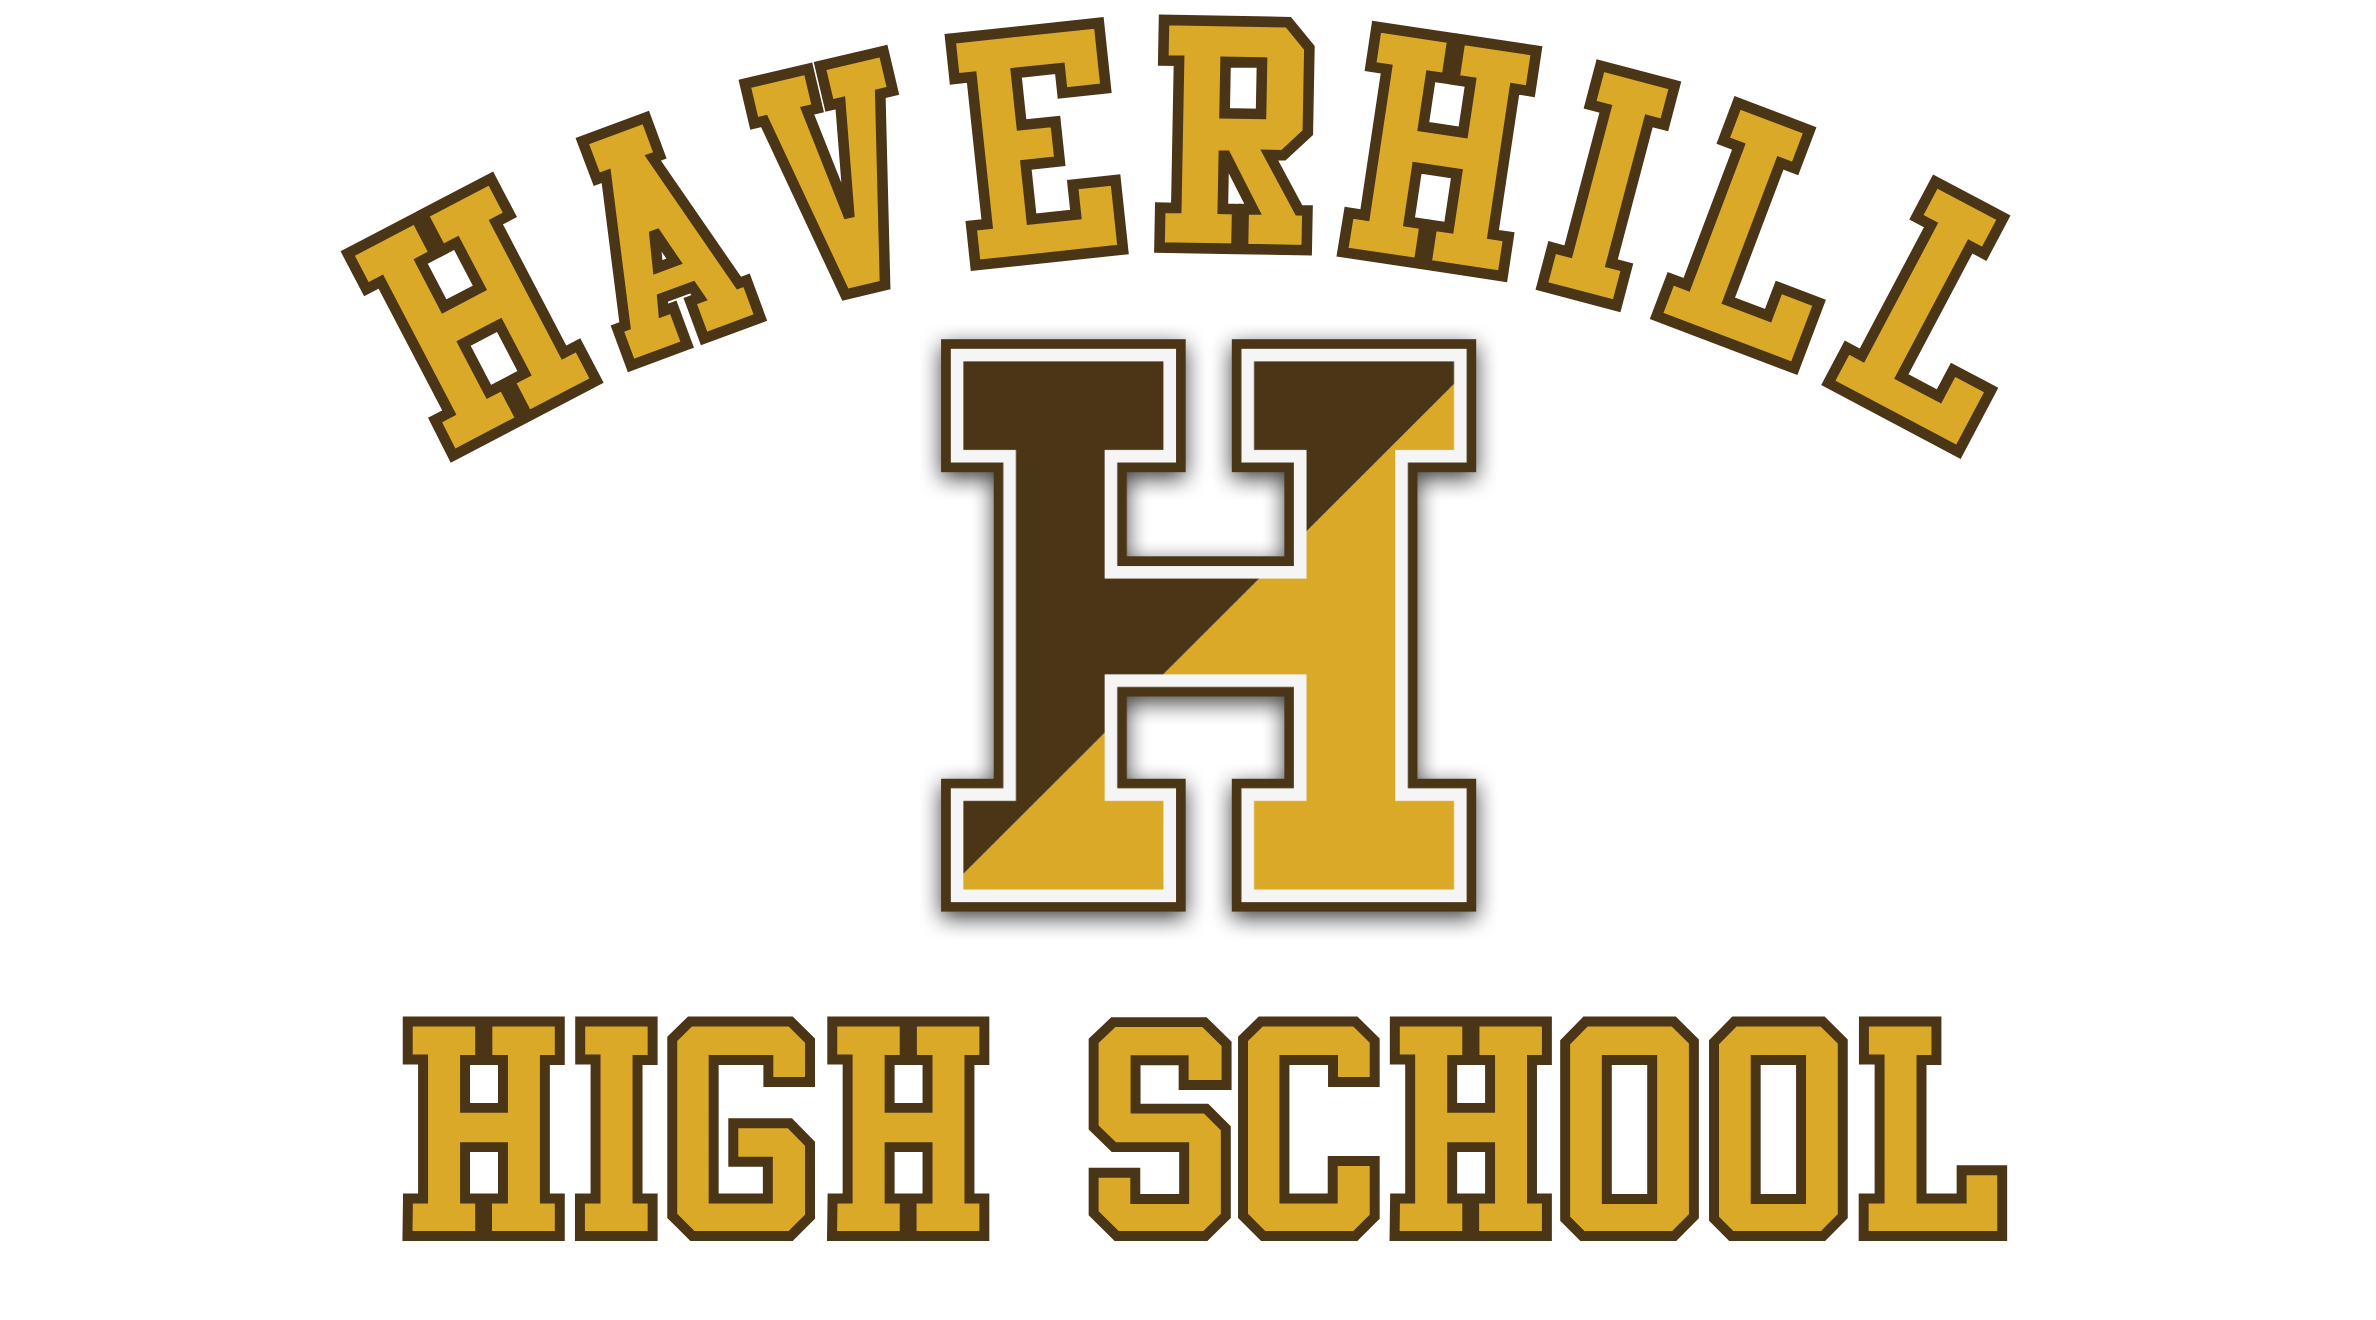 Haverhill High School